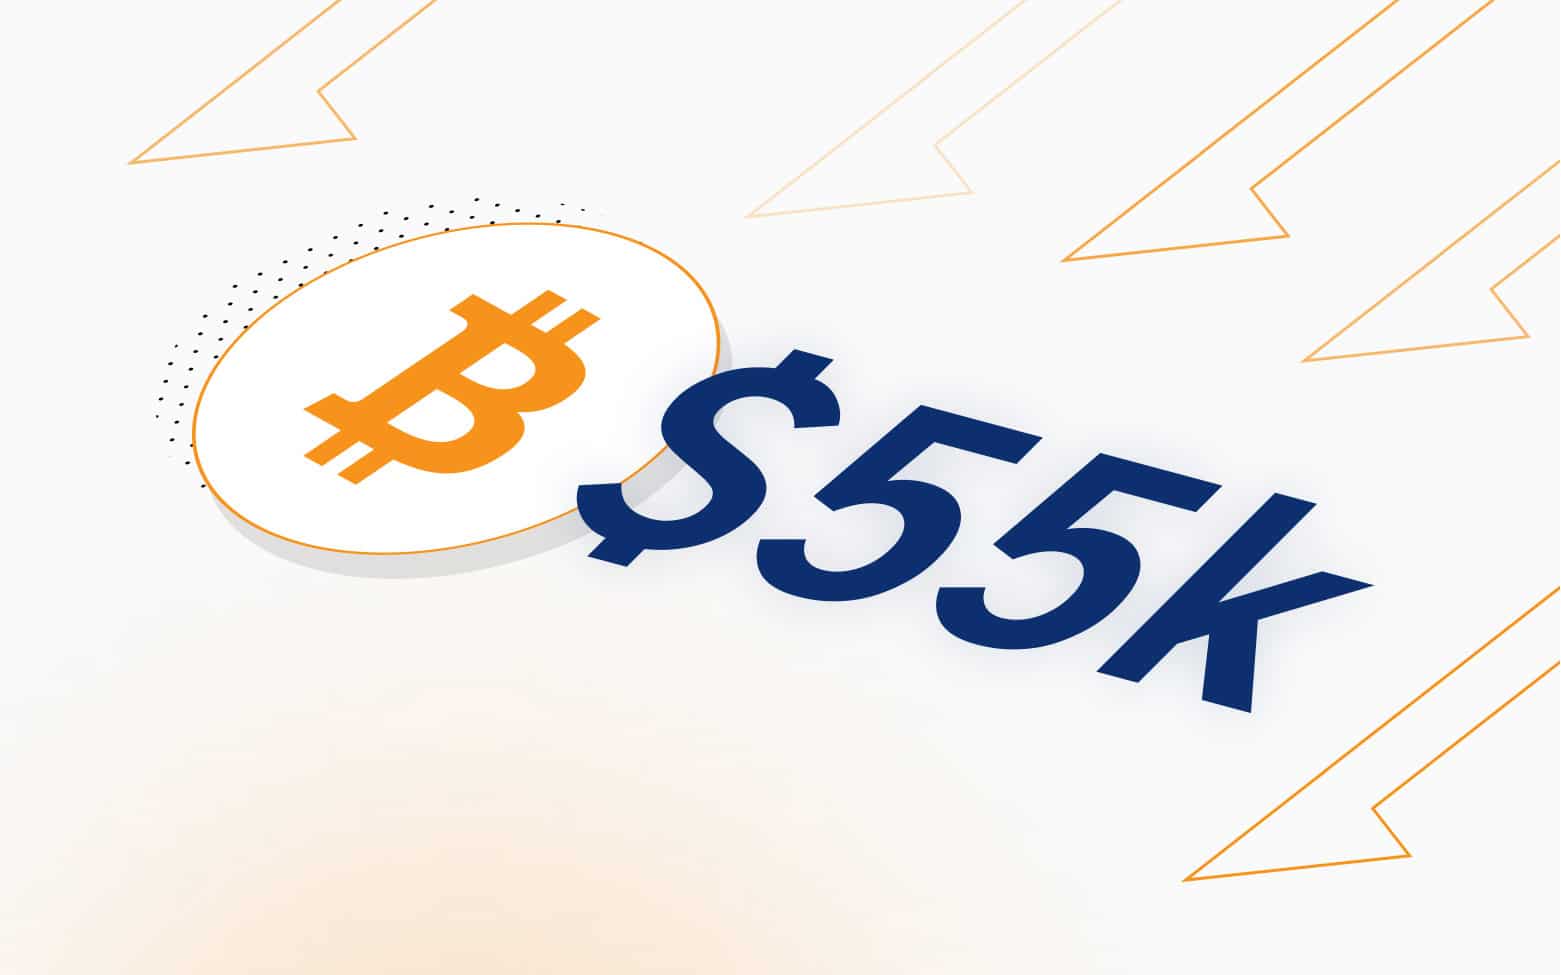 Bitcoin price at 55k